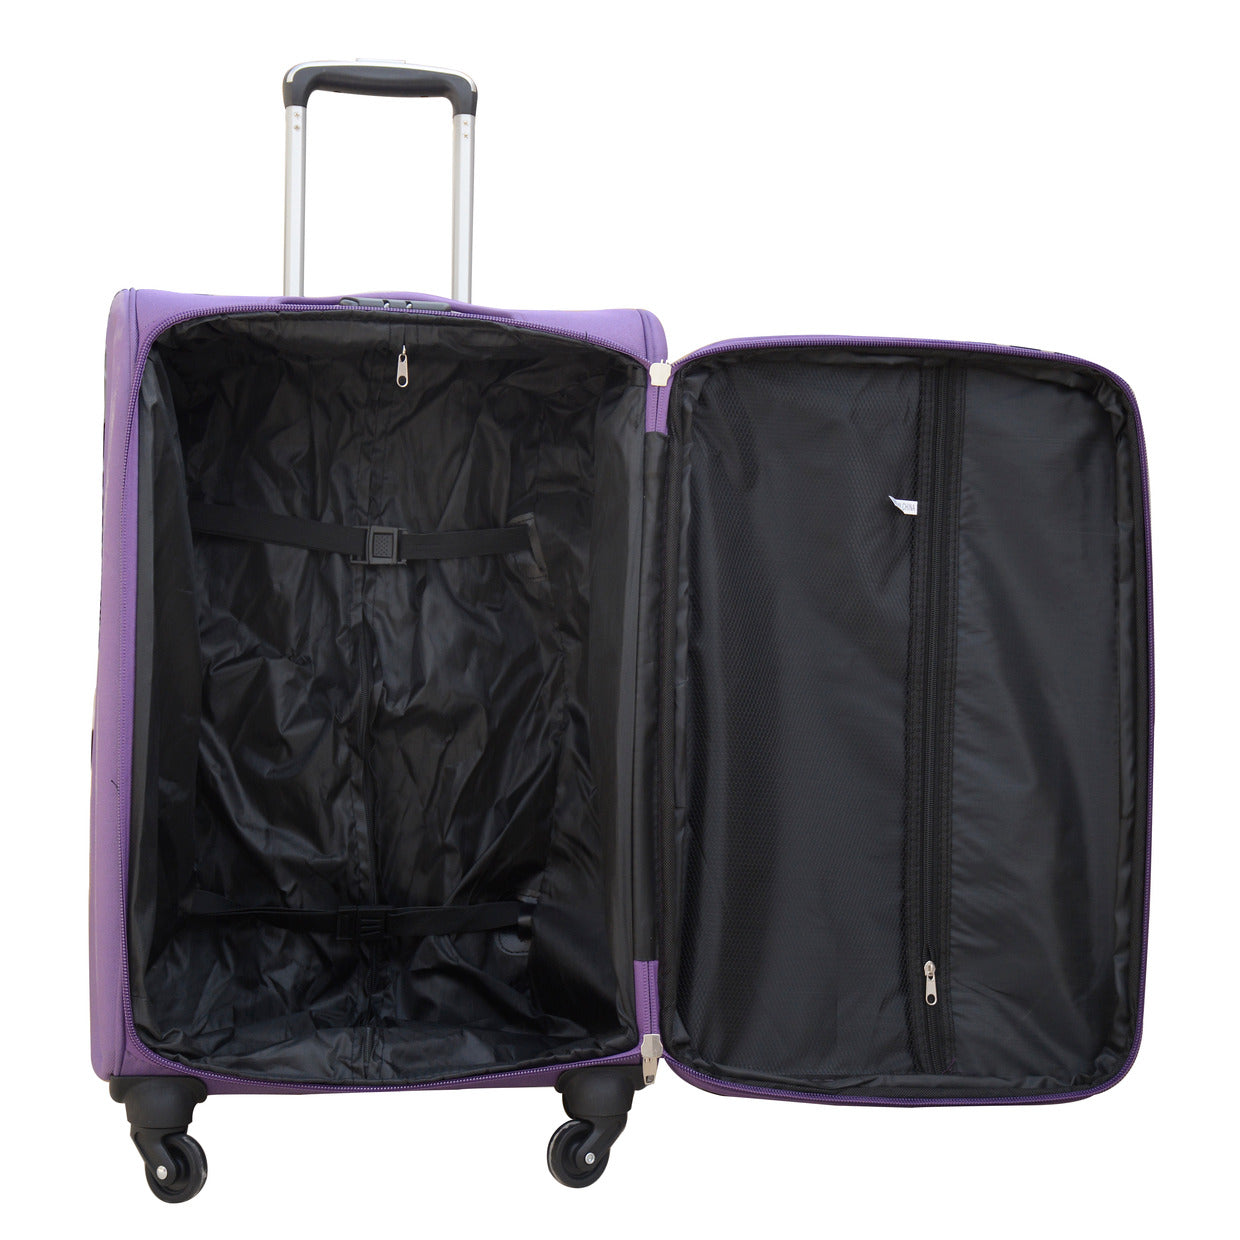 4 Piece Full Set 20" 24" 28" 32 Inches Purple Colour SJ JIAN 4 Wheel Luggage Lightweight Soft Material Trolley Bag